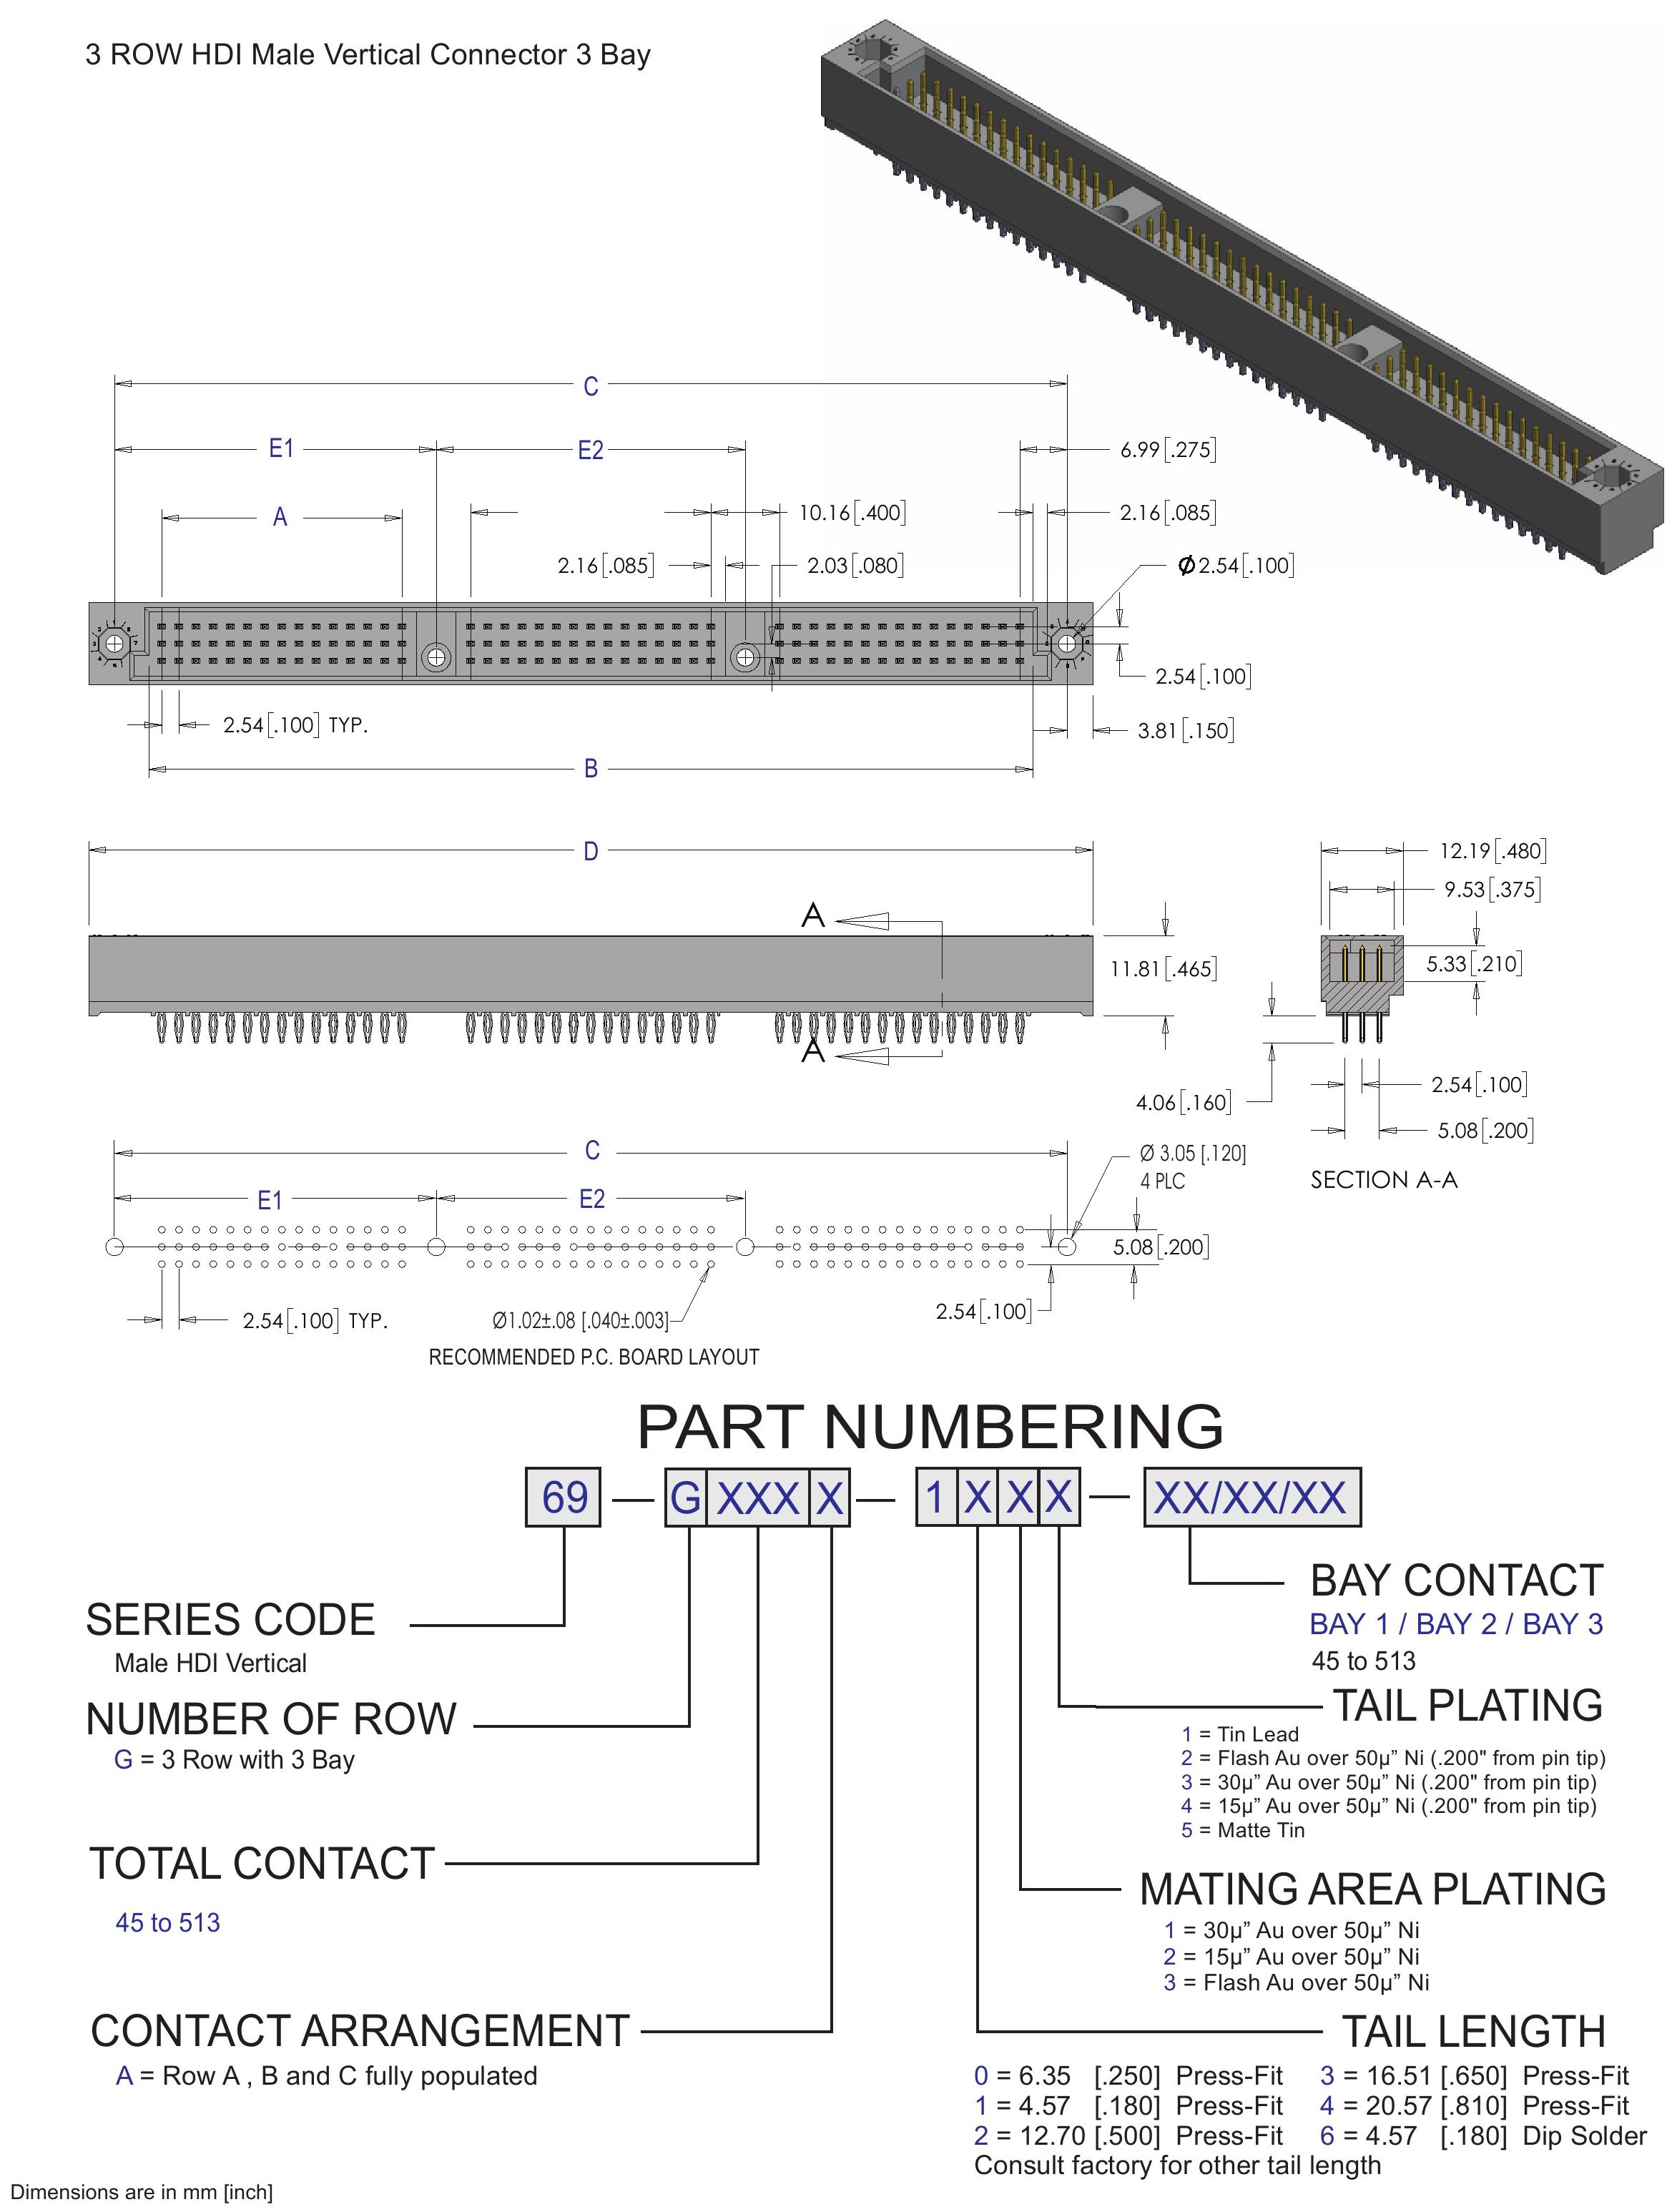 ECS 3 Row HDI Male Vertical 3 Bay Connector